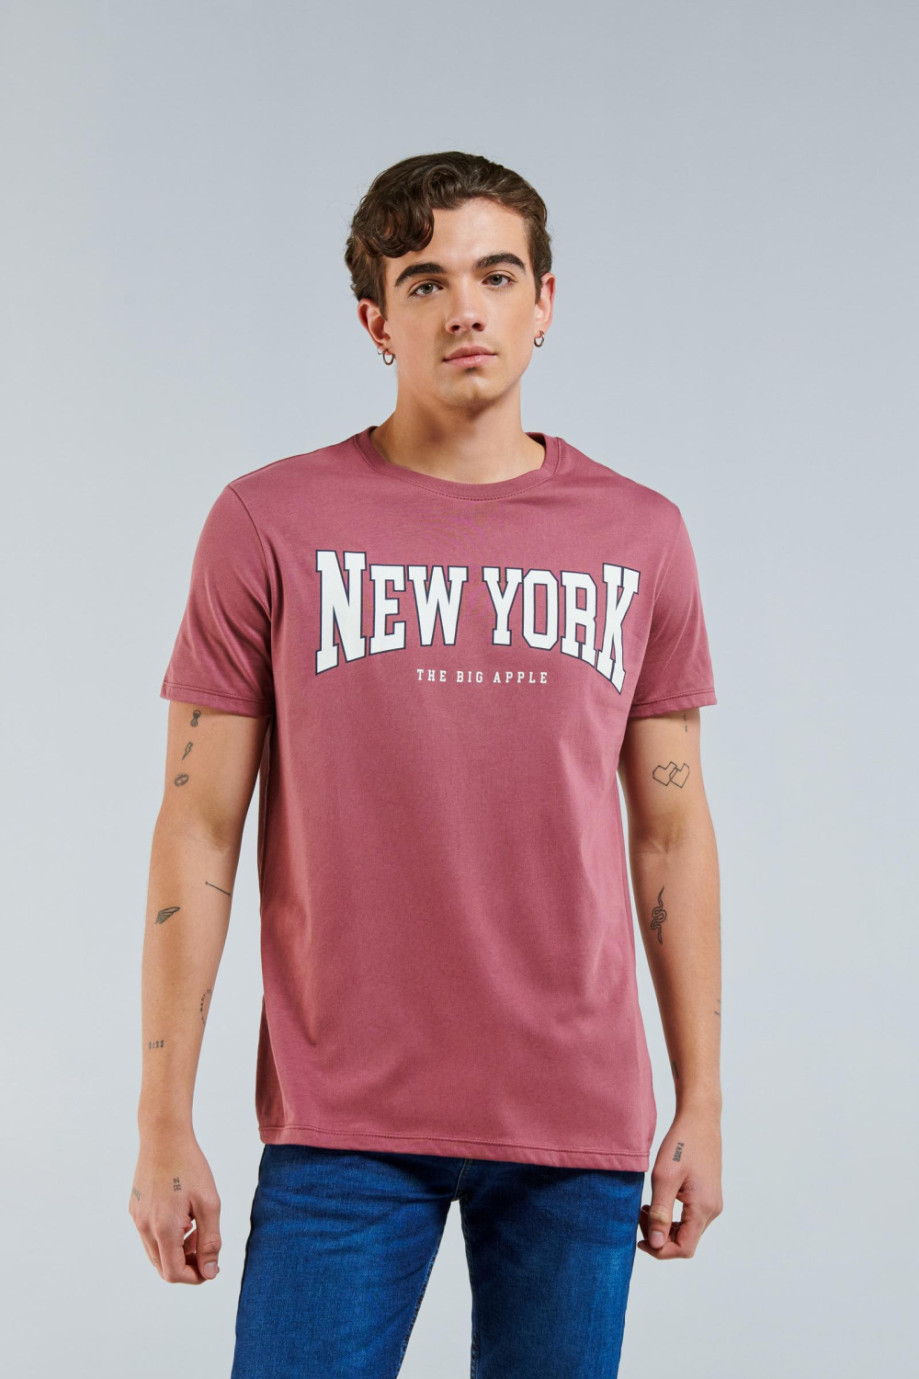 Camiseta morada con manga corta y texto college de New York